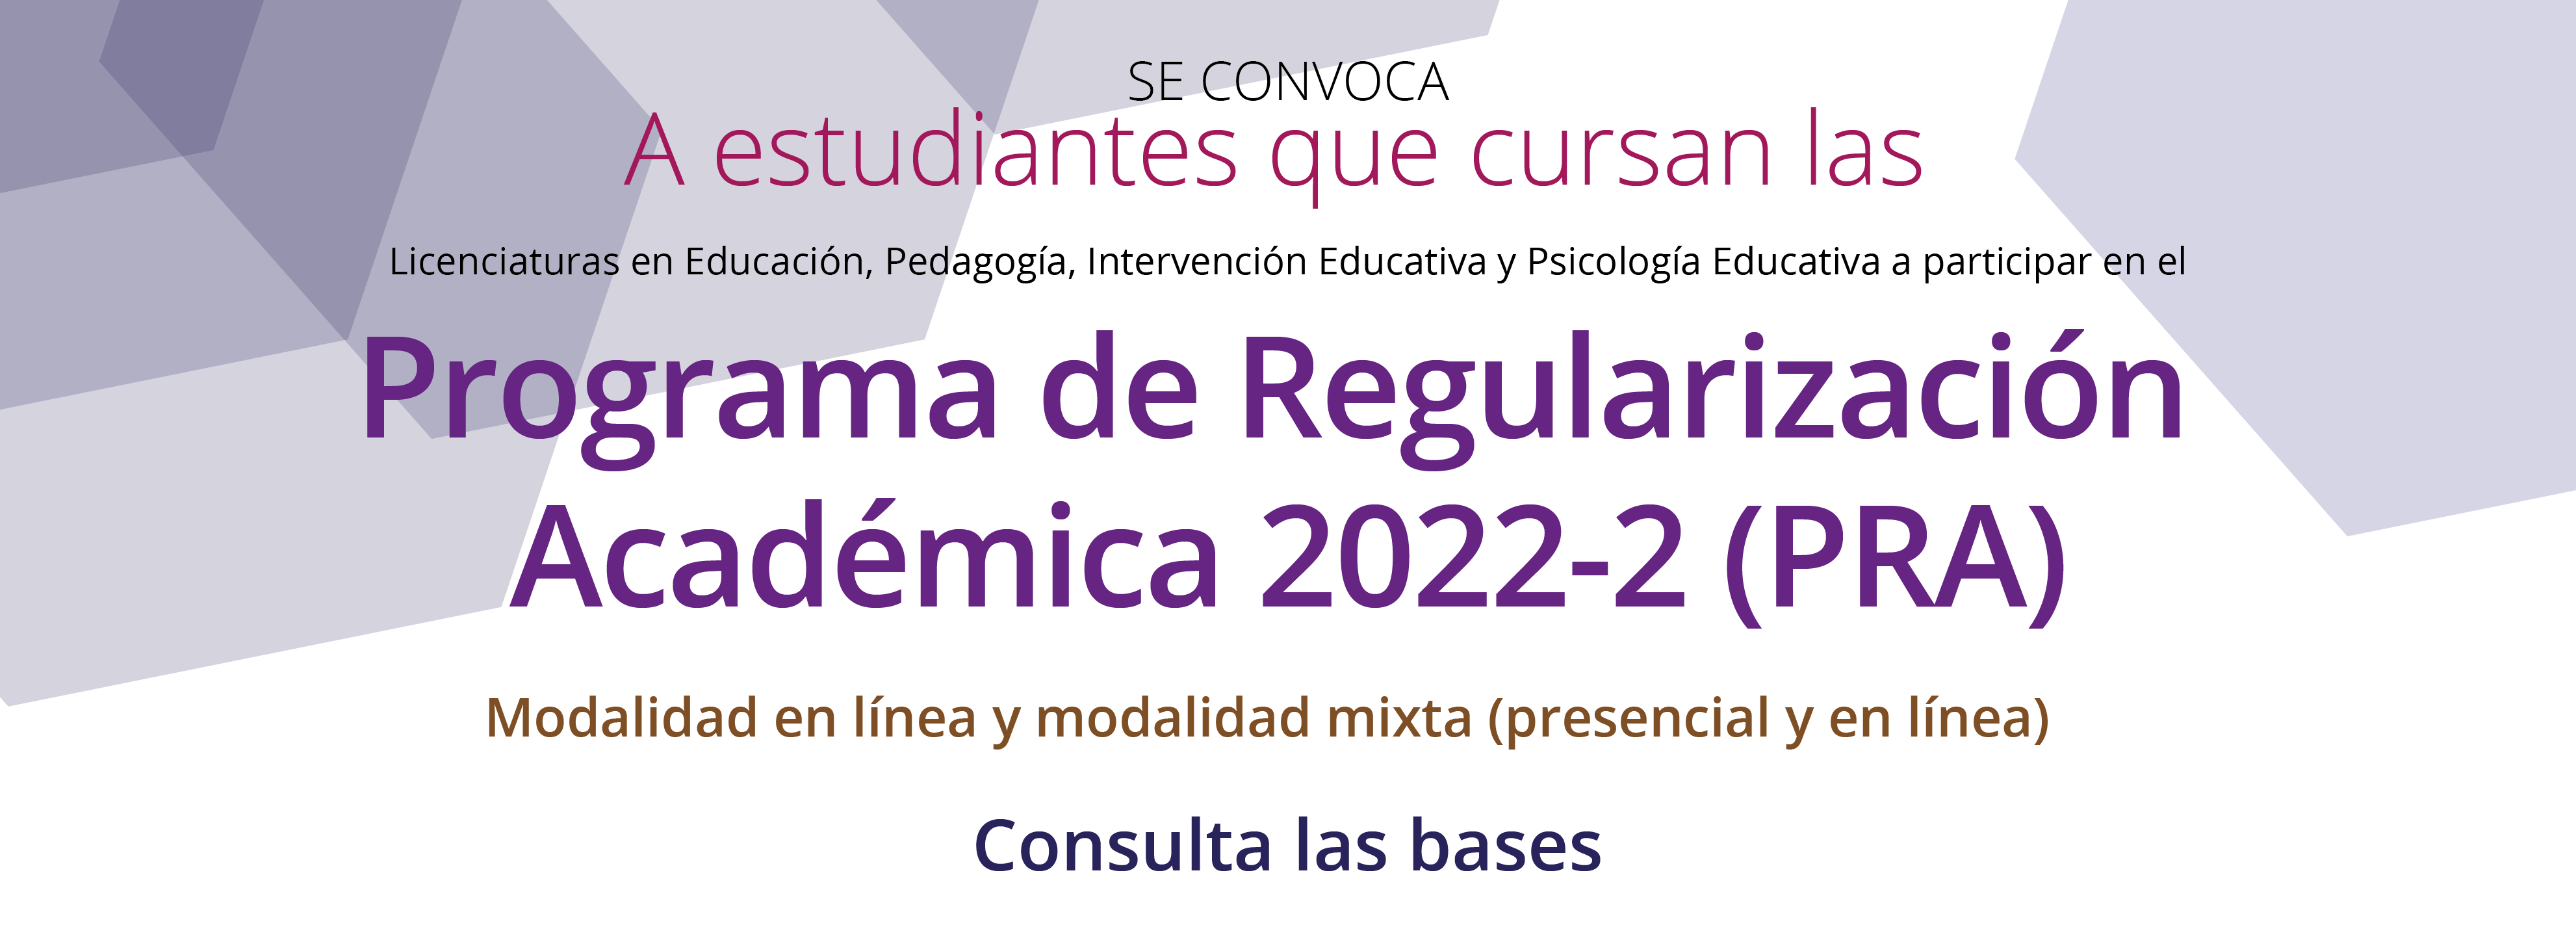 Convocatoria_Programa_de_Regularizacion_Academica_2022-2_PRA_Estudiantes_banner_web